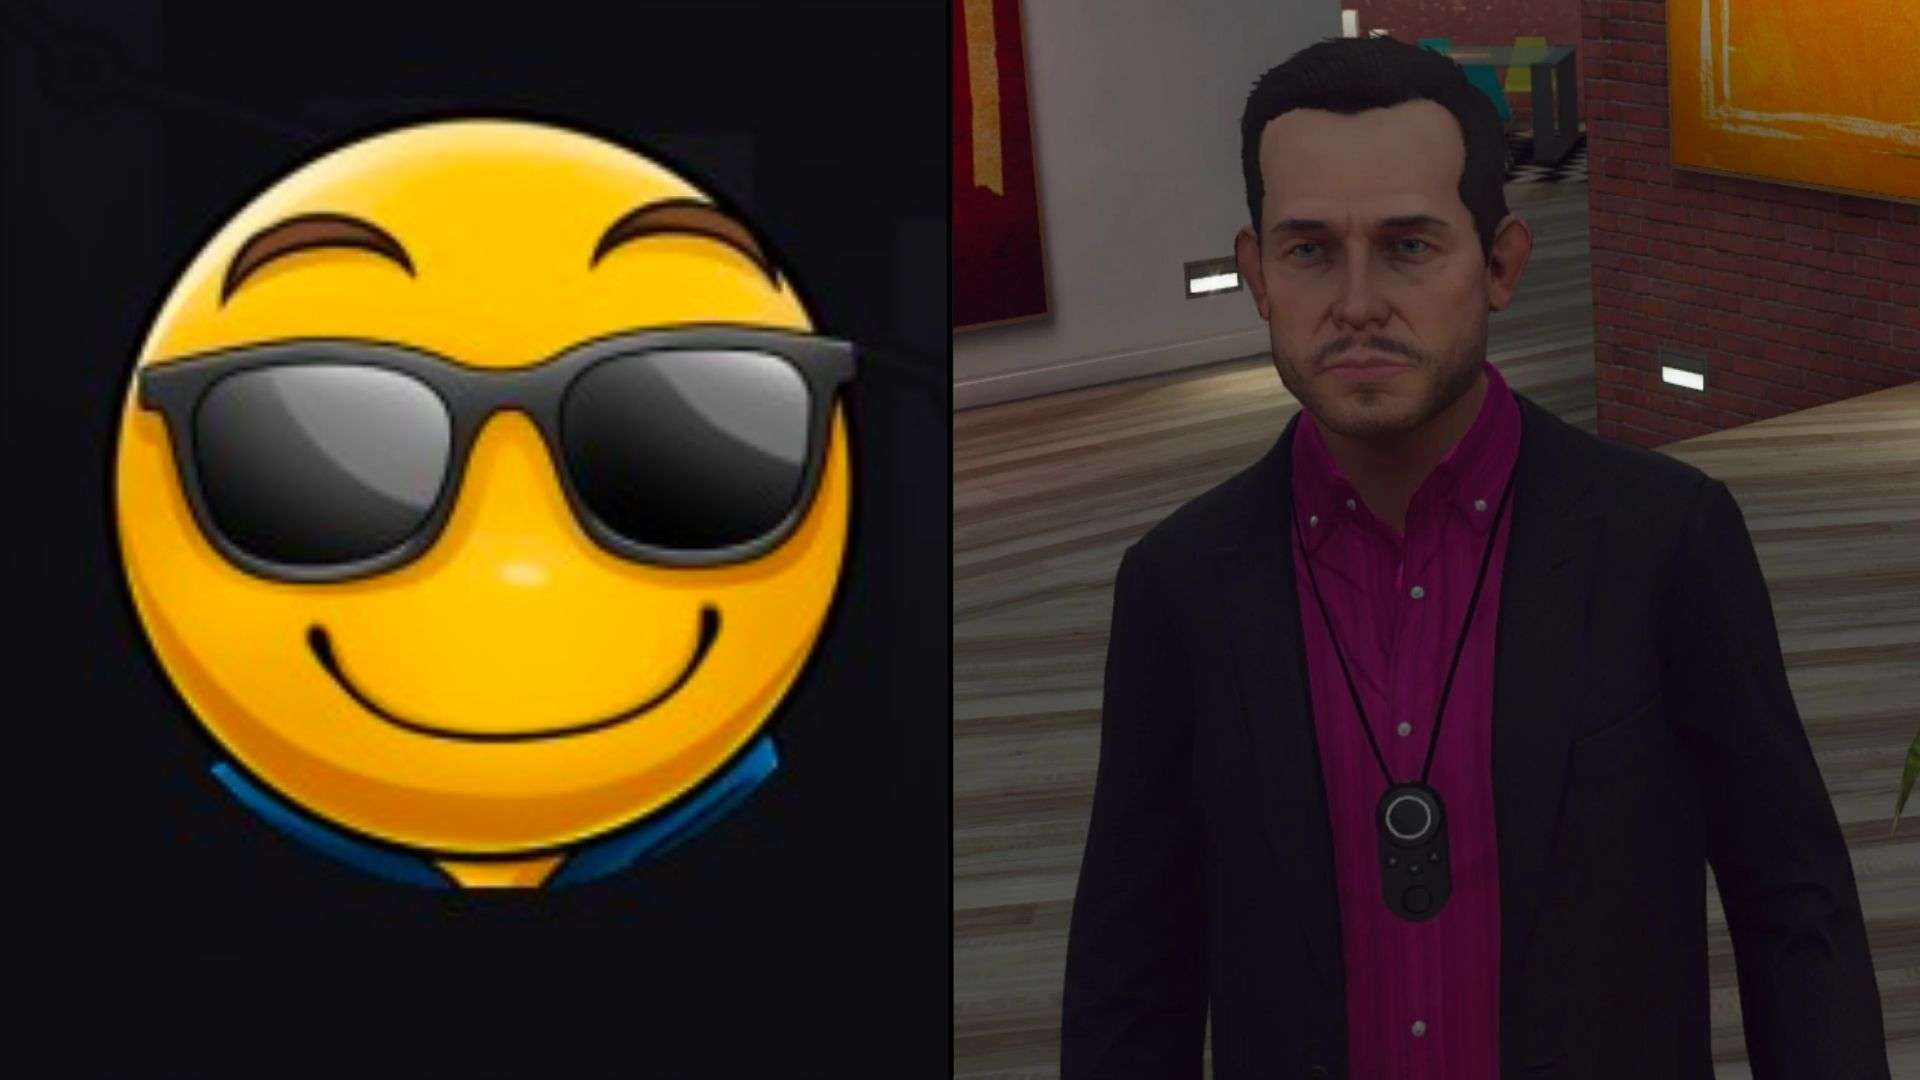 Smiling yellow face emoji alongside GTA rp character